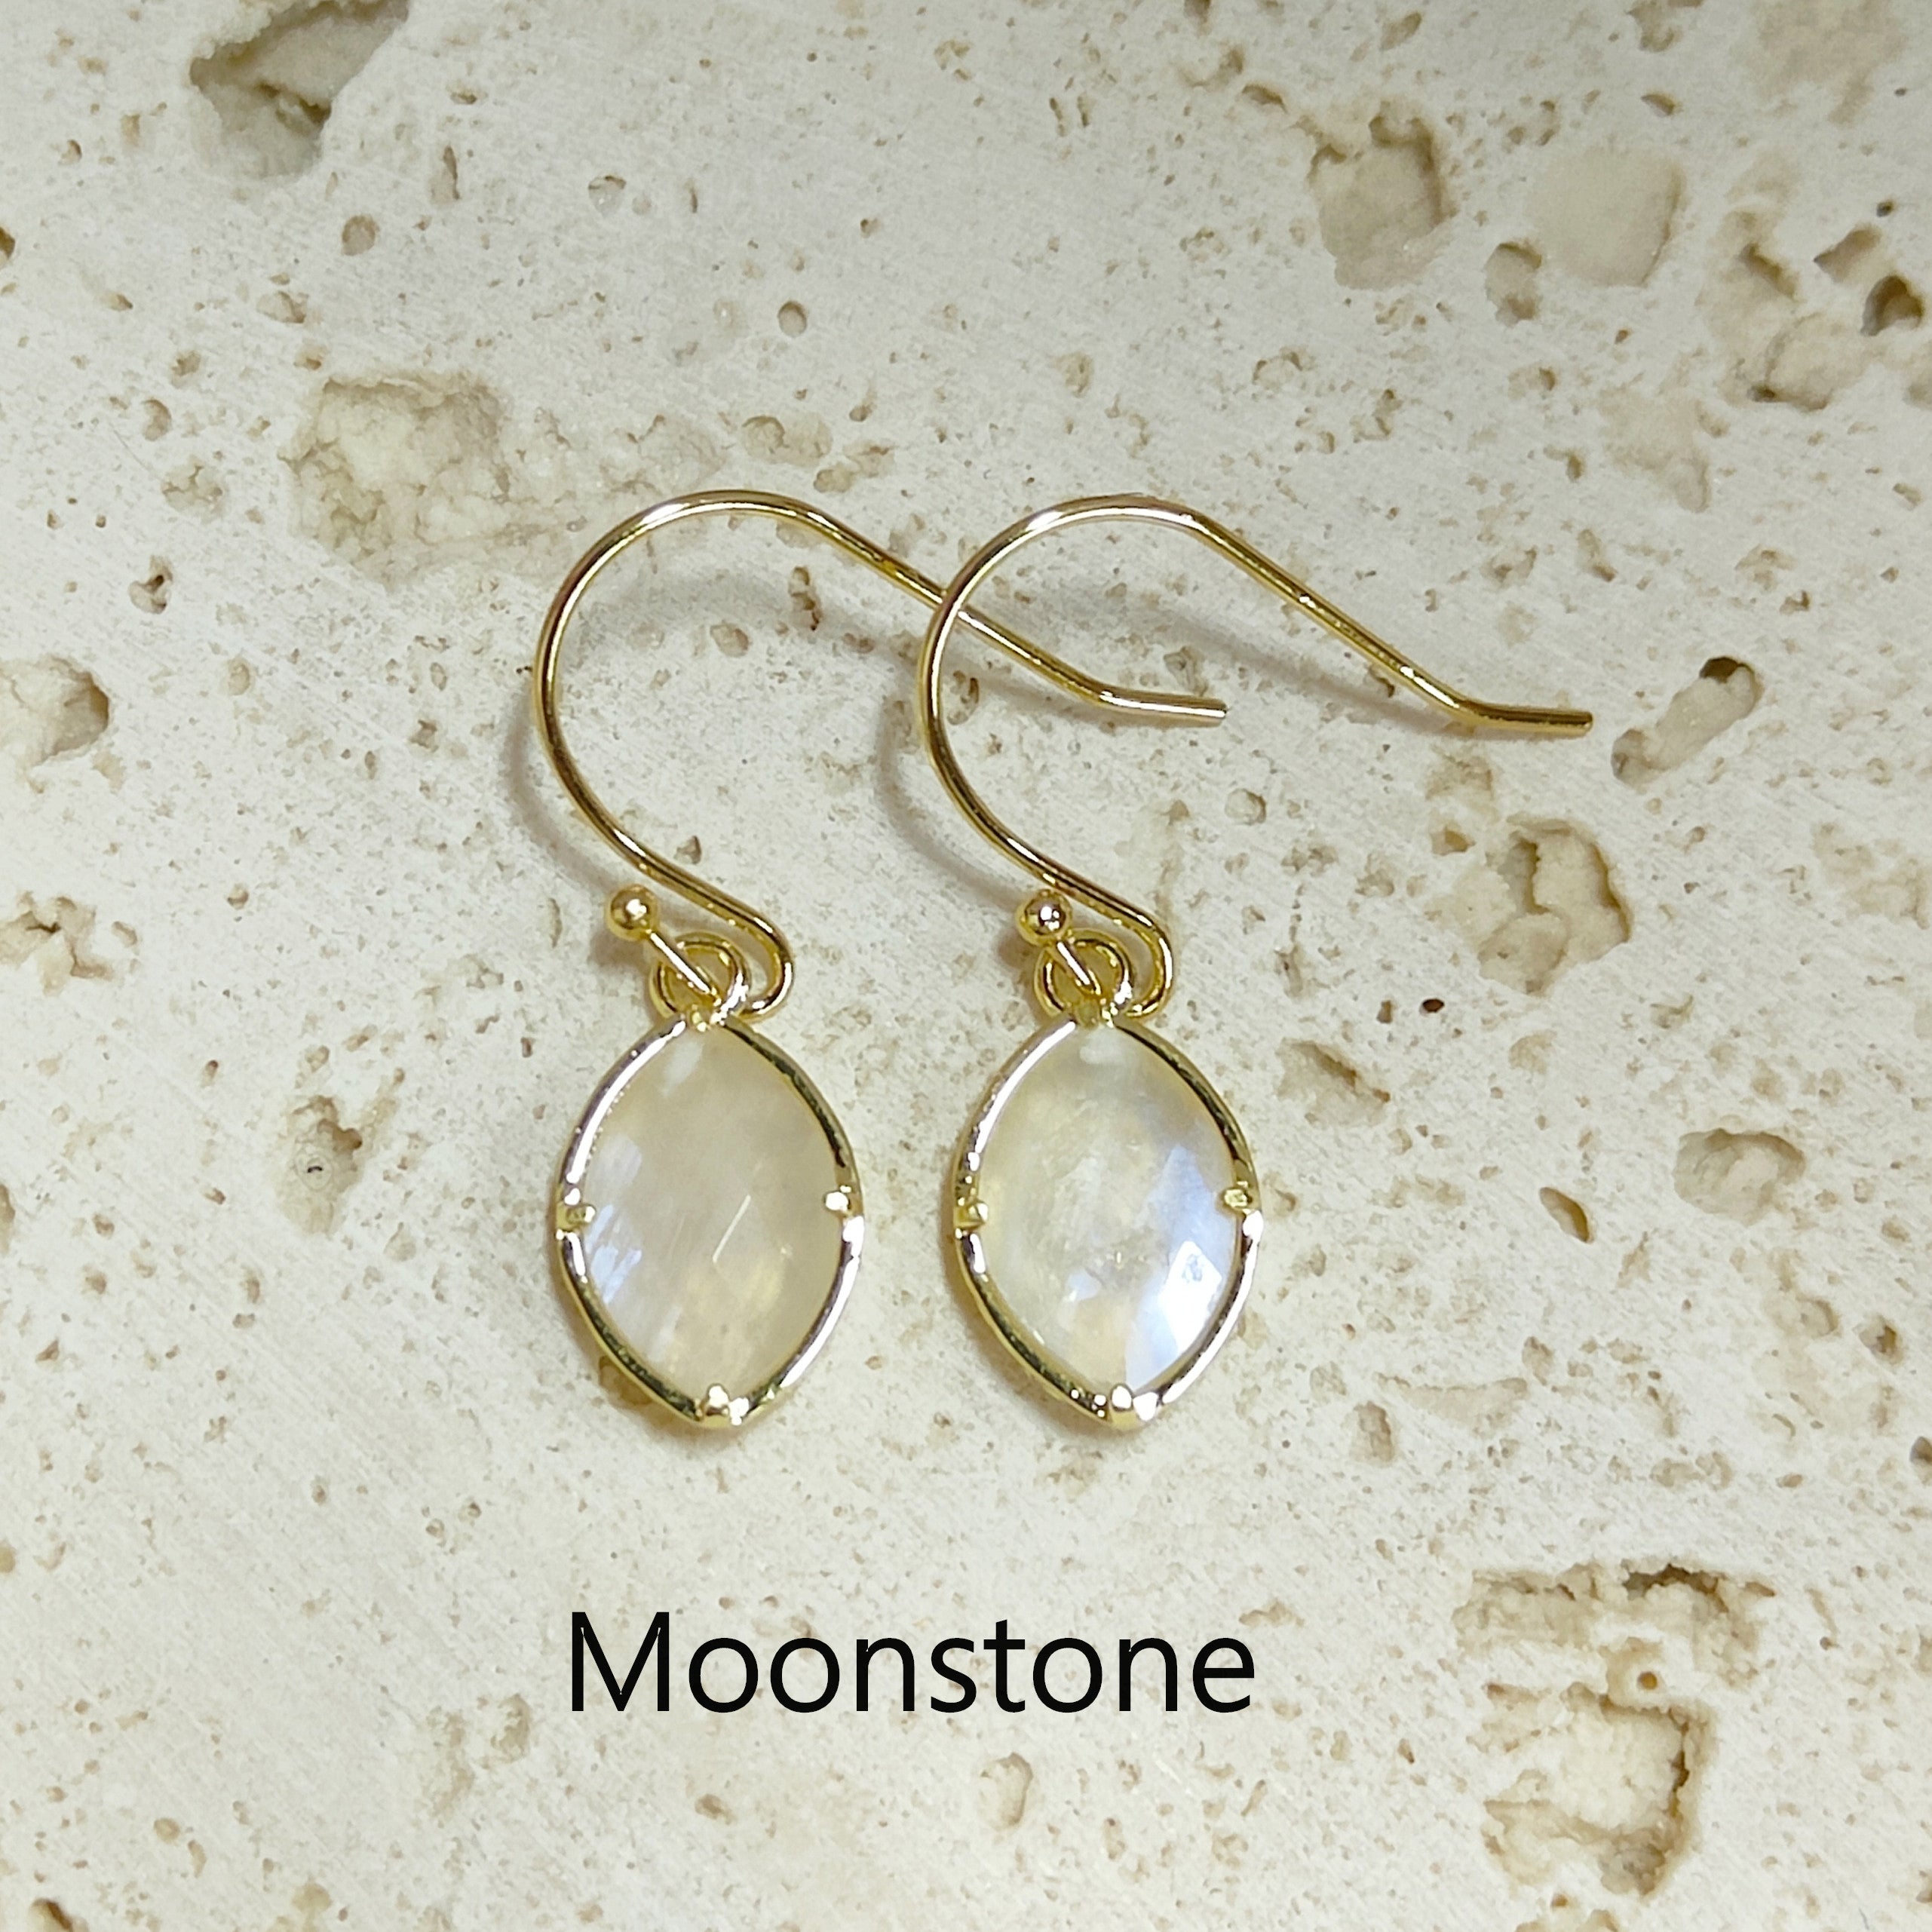 moonstone earrings Wholesale Gold Plated Marquise Gemstone Earrings, Healing Crystals Stone Earrings Jewelry AL573